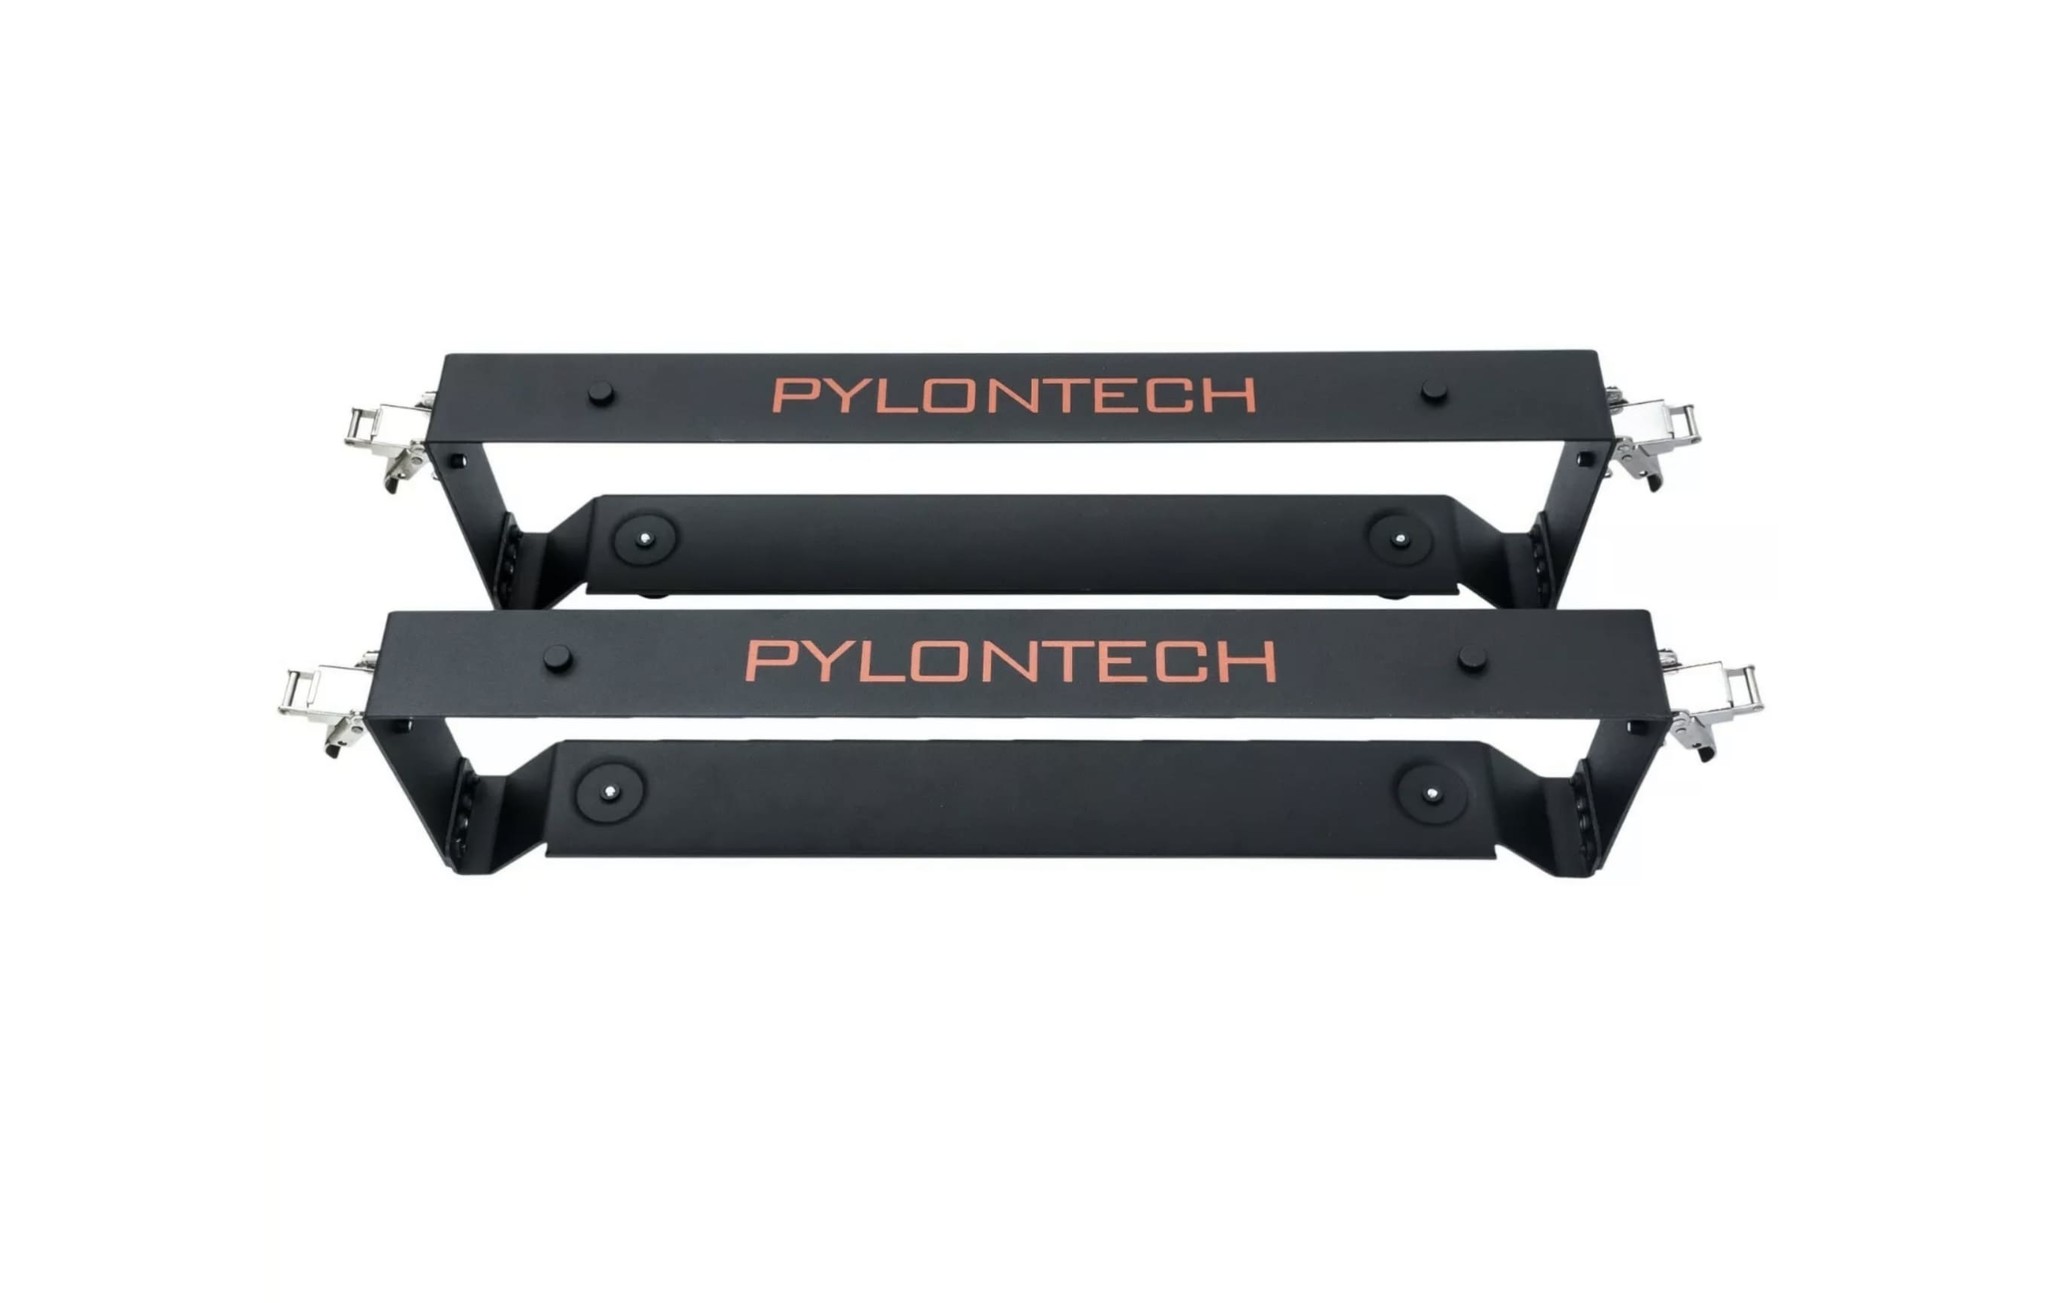 Pylontech holder / brackets for US3000C LIFEPO4 battery